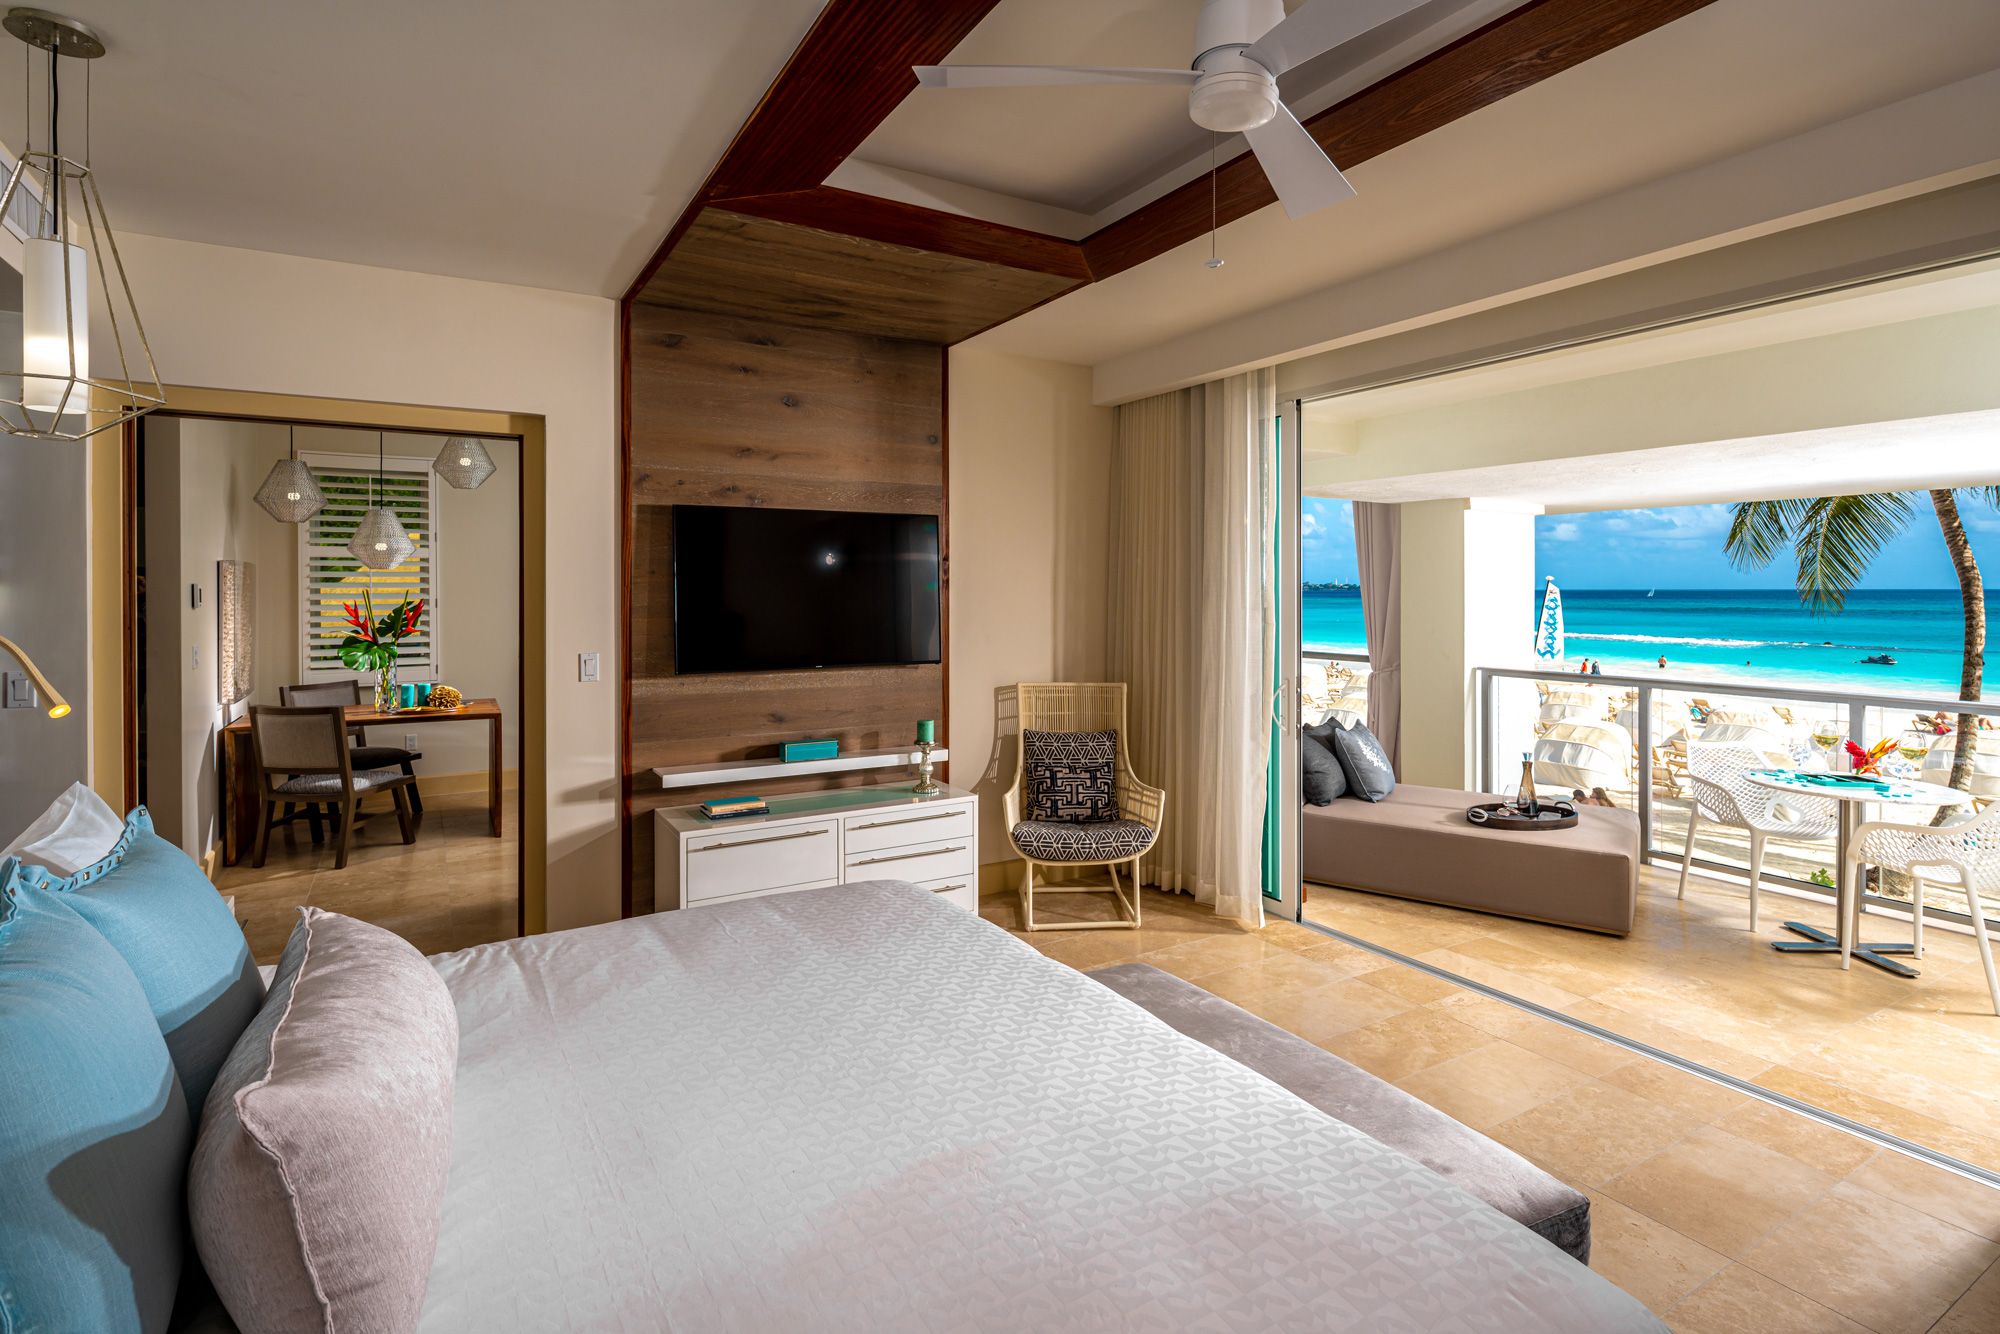 Sandals Royal Barbados Beachfront Butler Suite